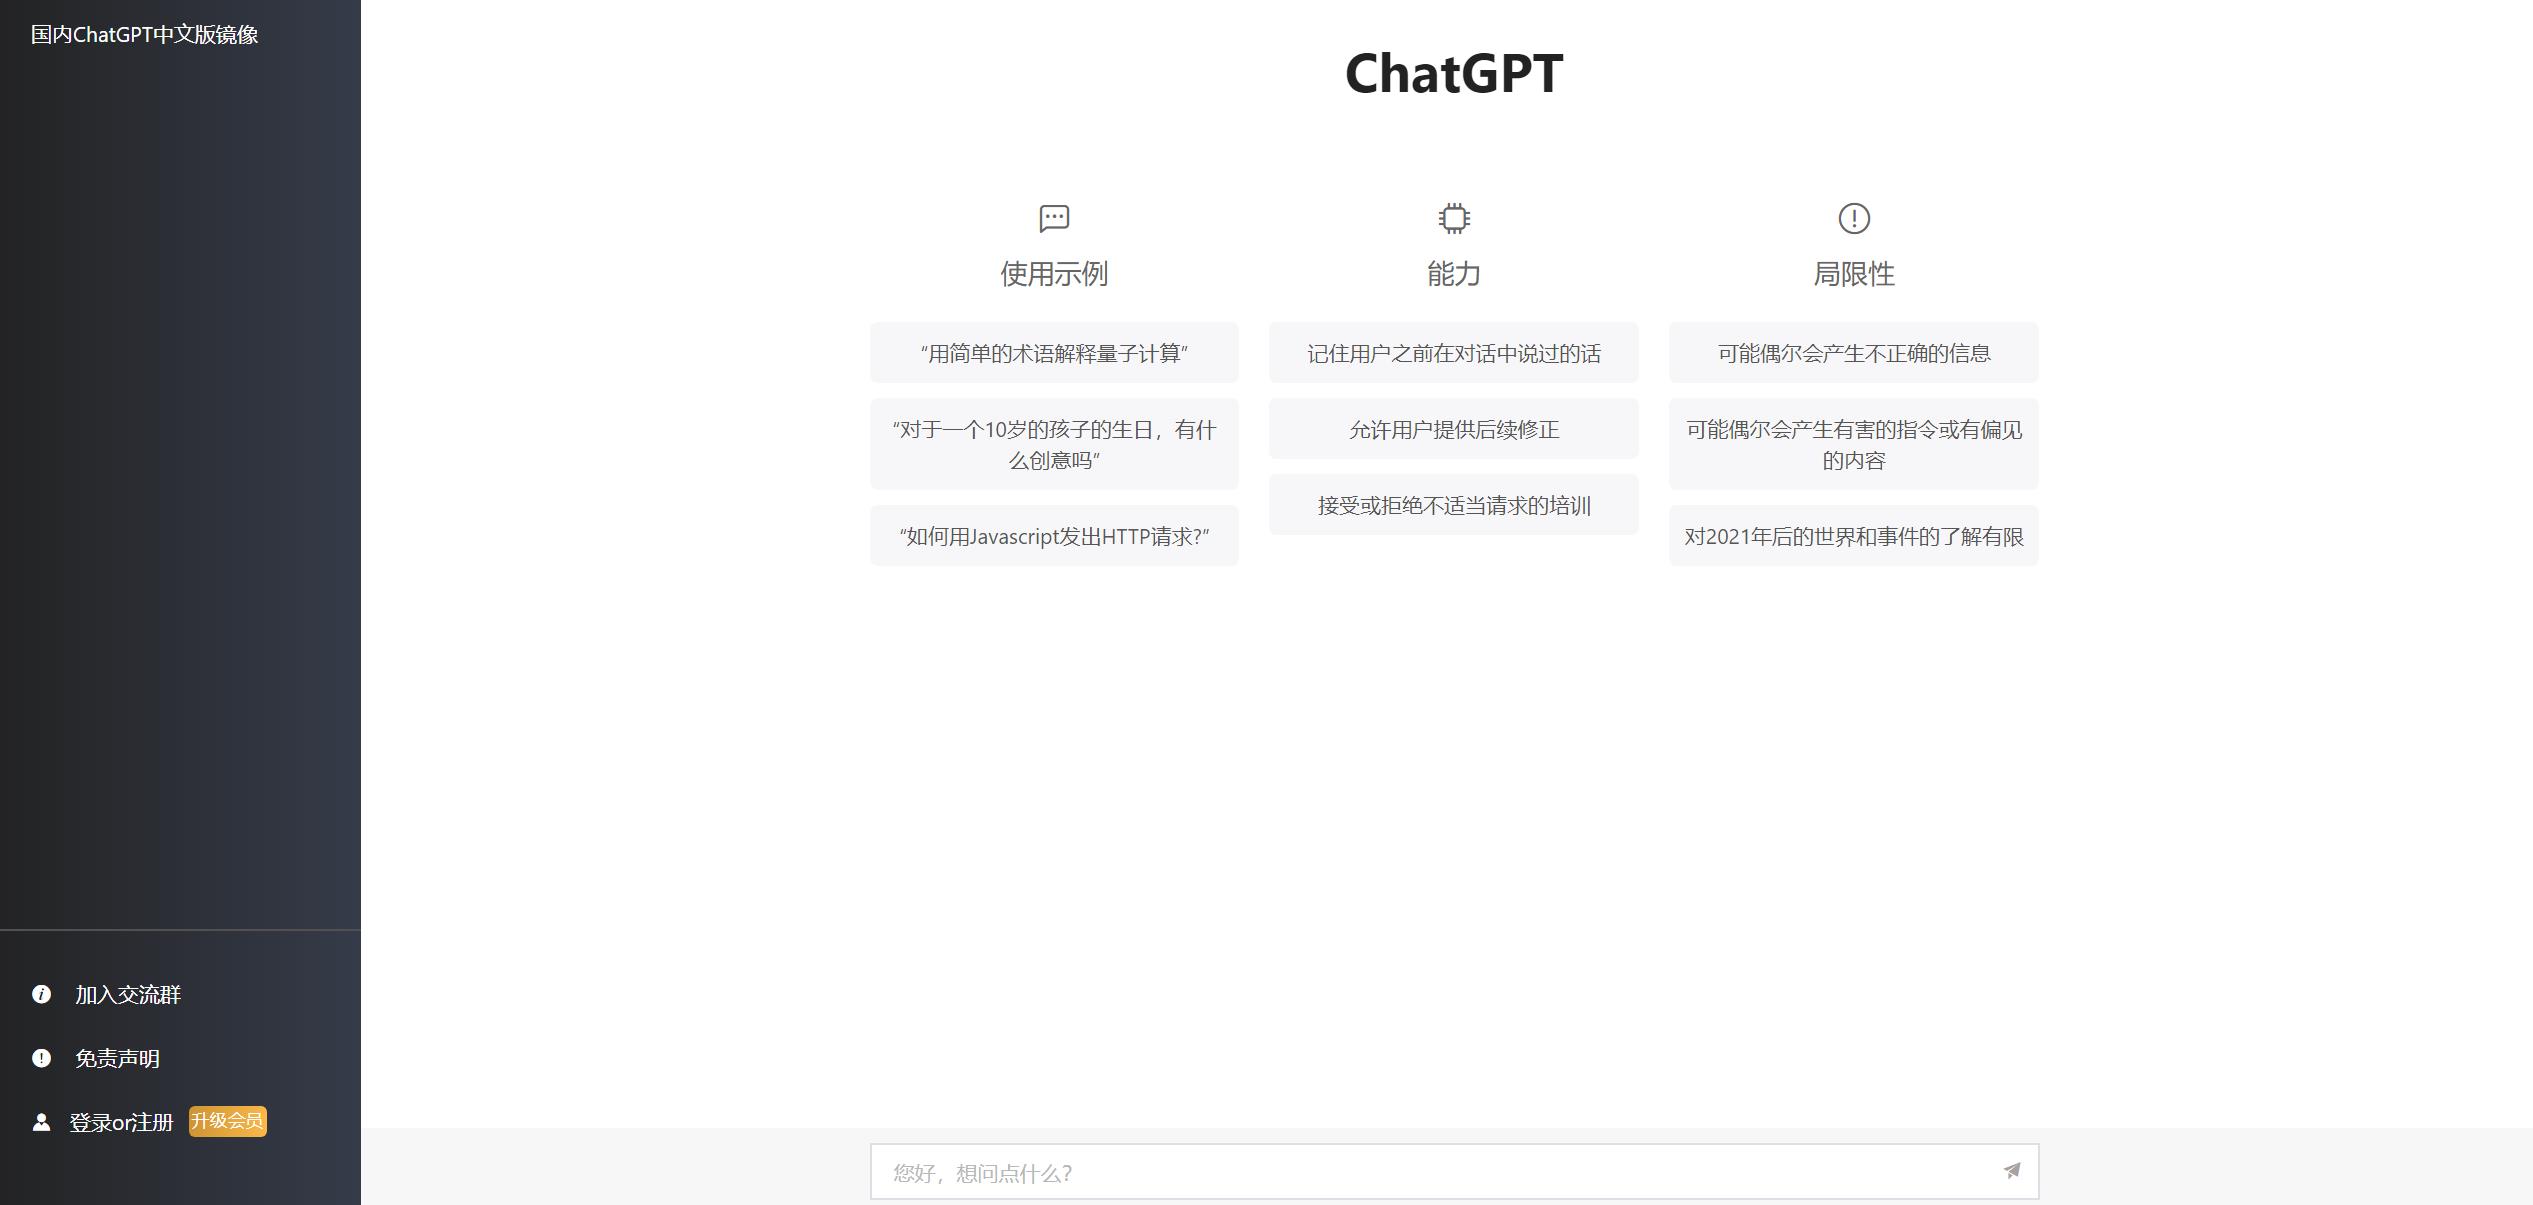 ChatGPT网站的最新版本已经发布，这个版本支持用户购买付费套餐，并且用户可以通过该网站赚取收益。插图5